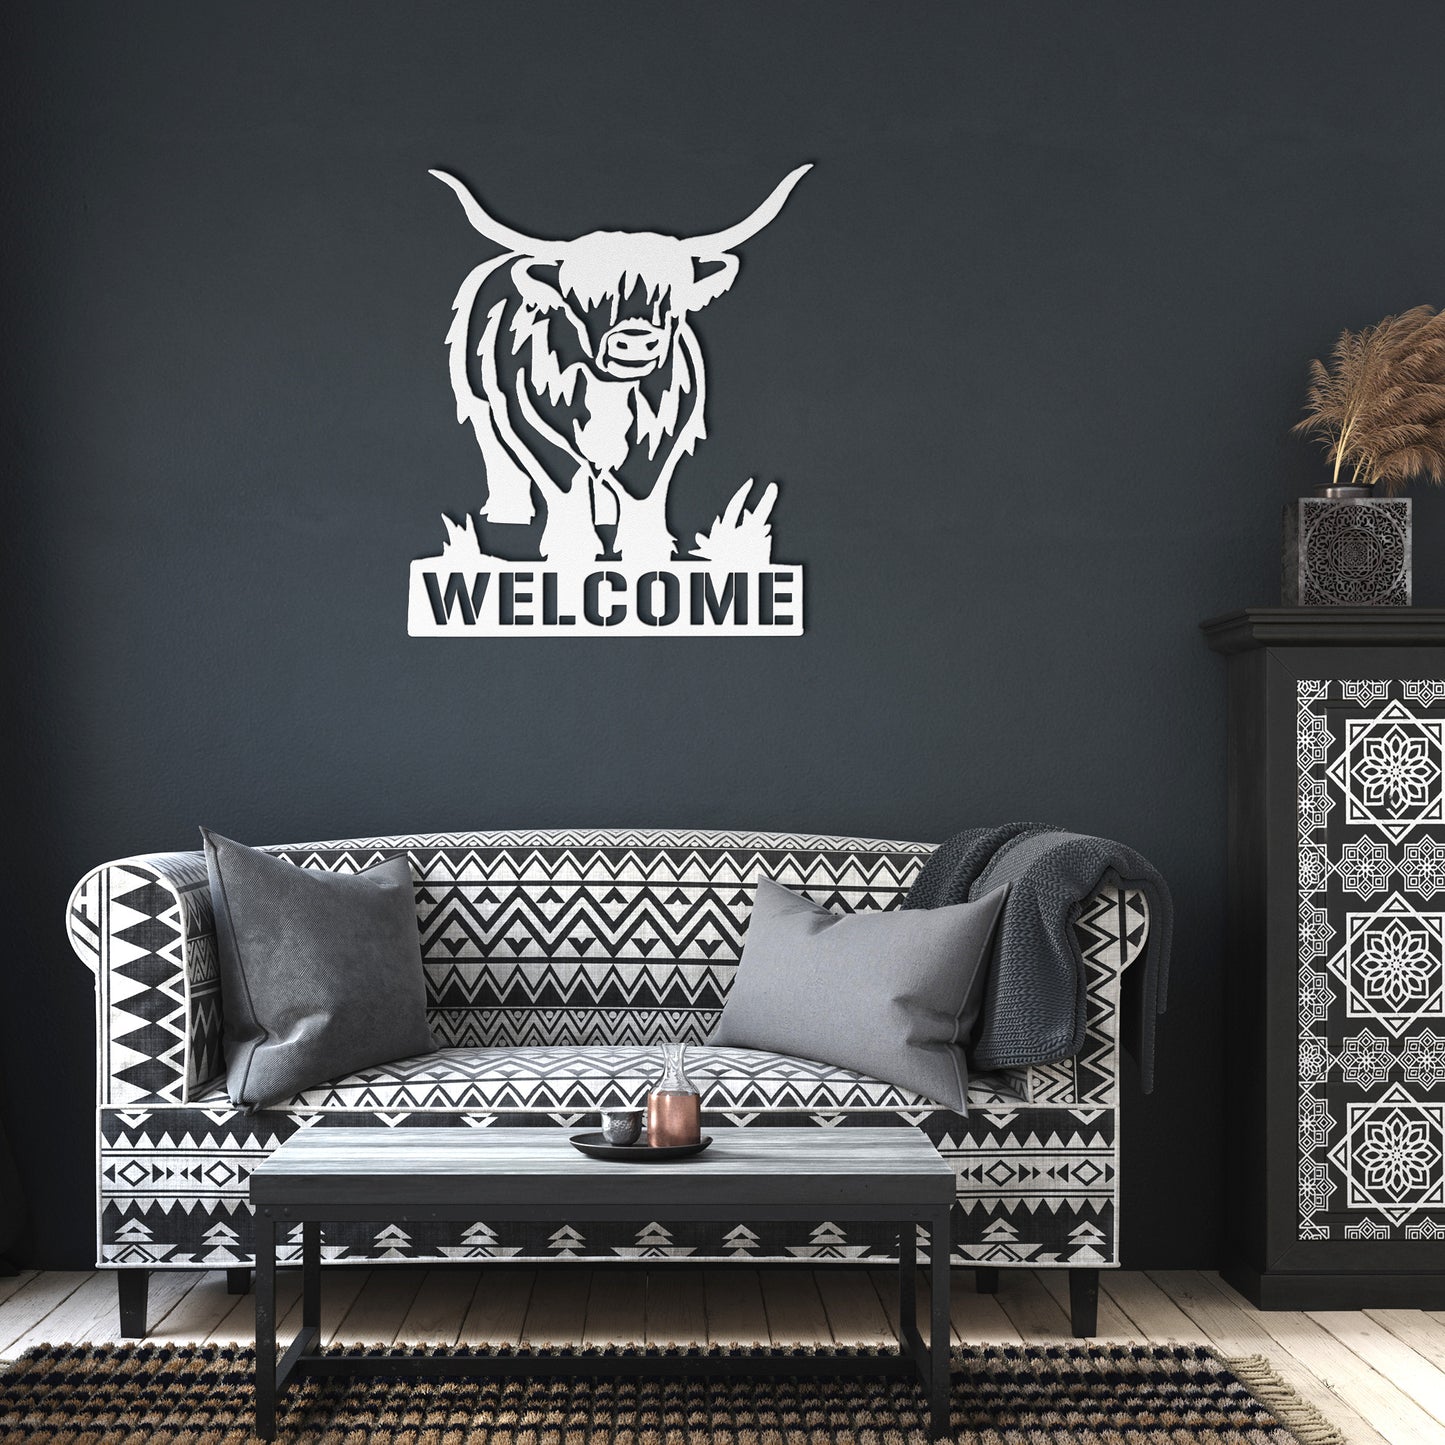 Rustic Highland Cow Metal Art-Welcome Farmhouse Wall Decor